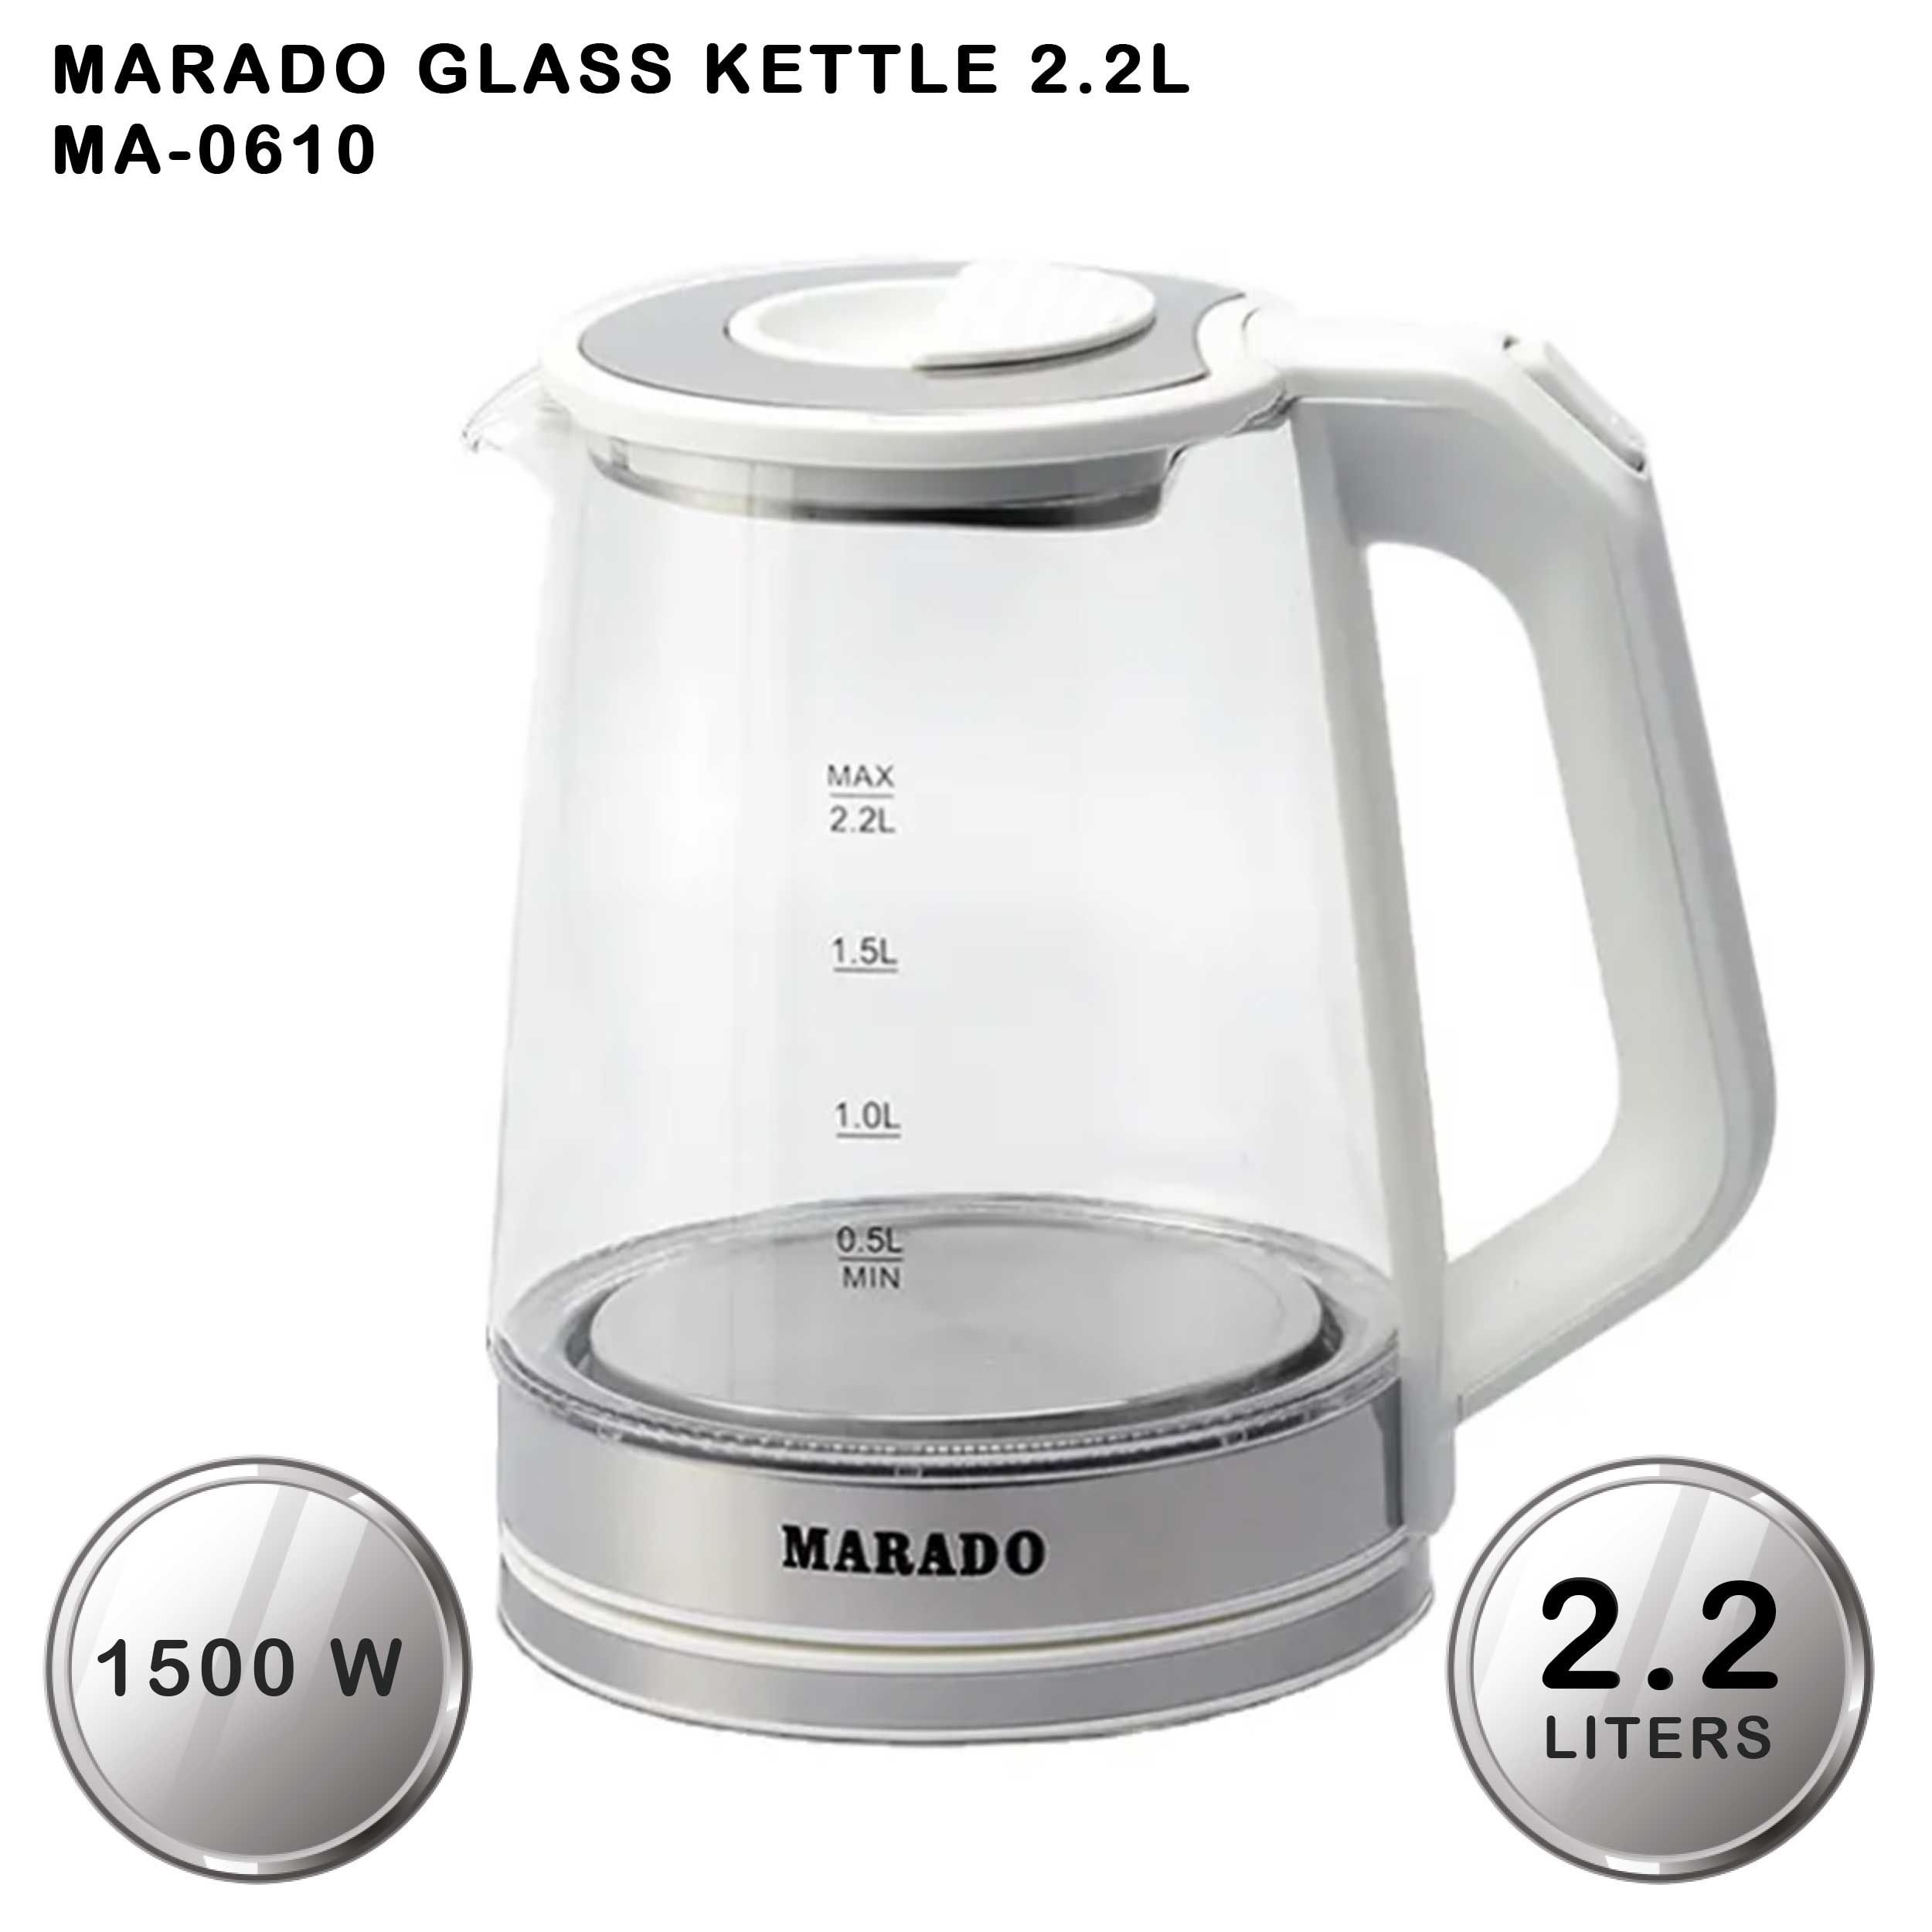 Marado Glass Kettle 2.2L MA-0610 White